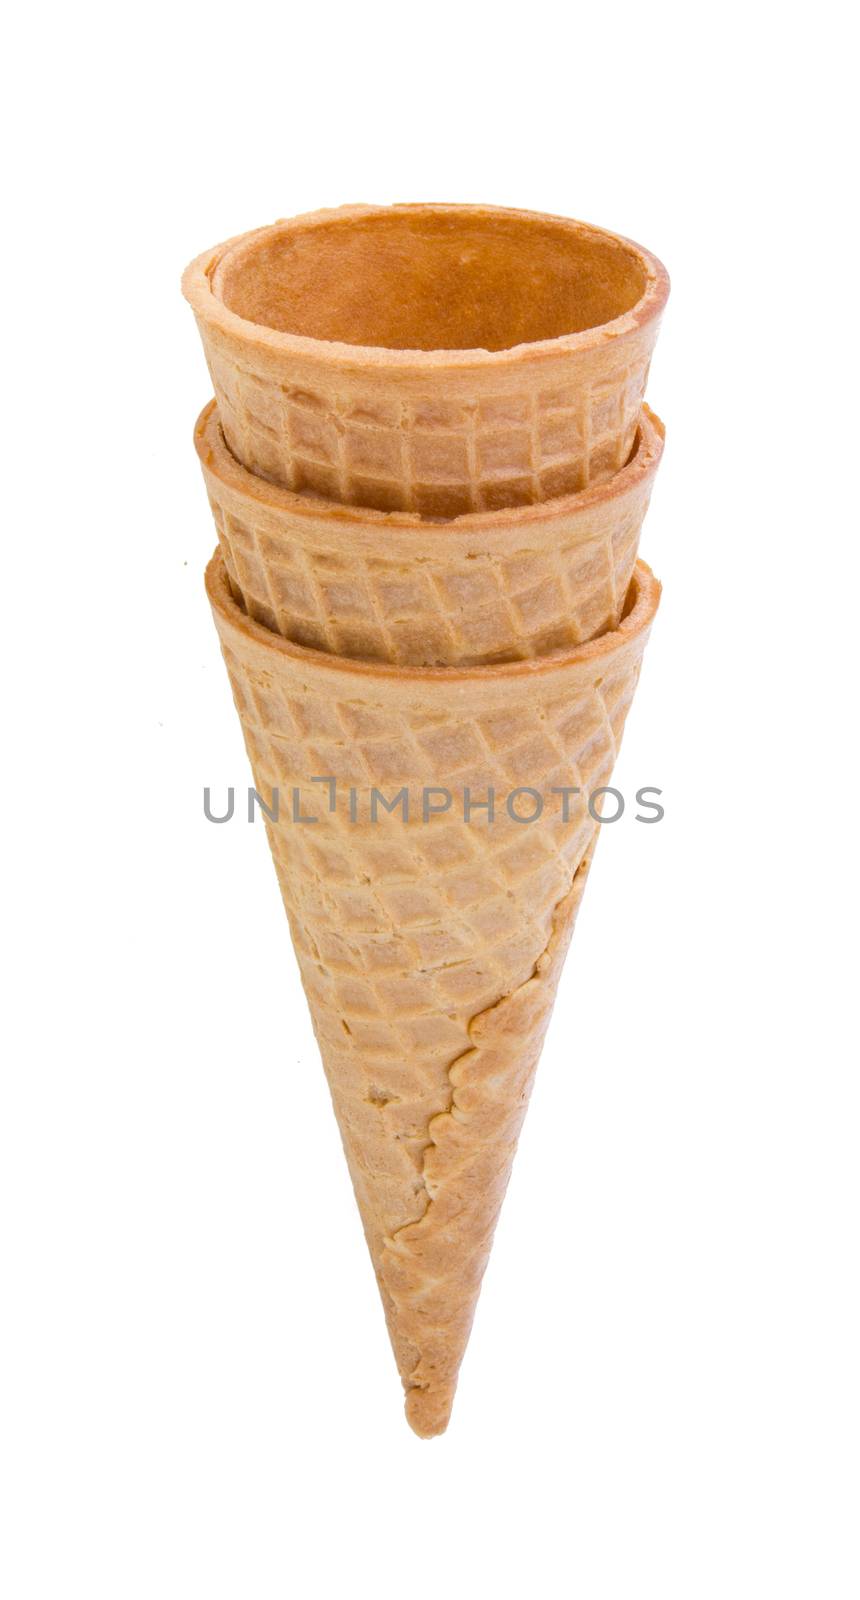 Ice cream cones by tehcheesiong